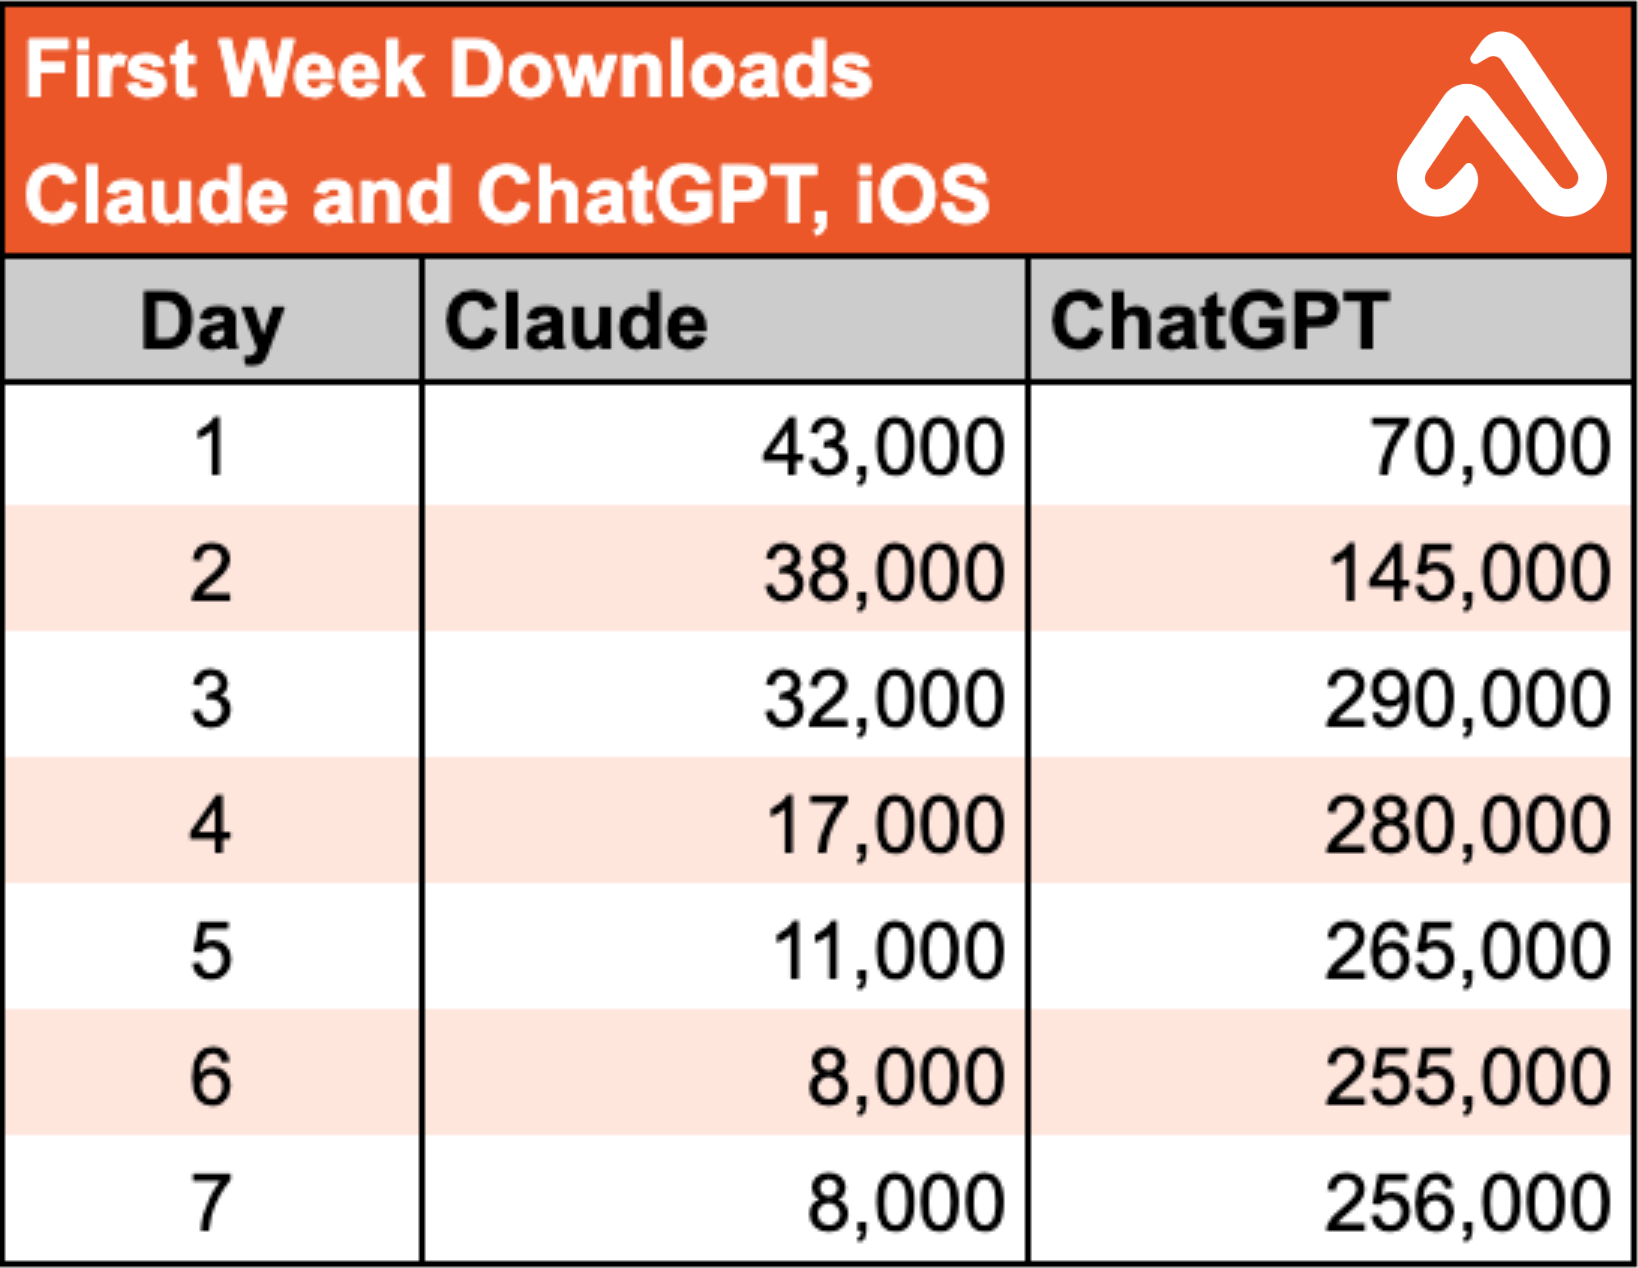 af-claude-chatgpt-ios-first-week-downloads-worldwide